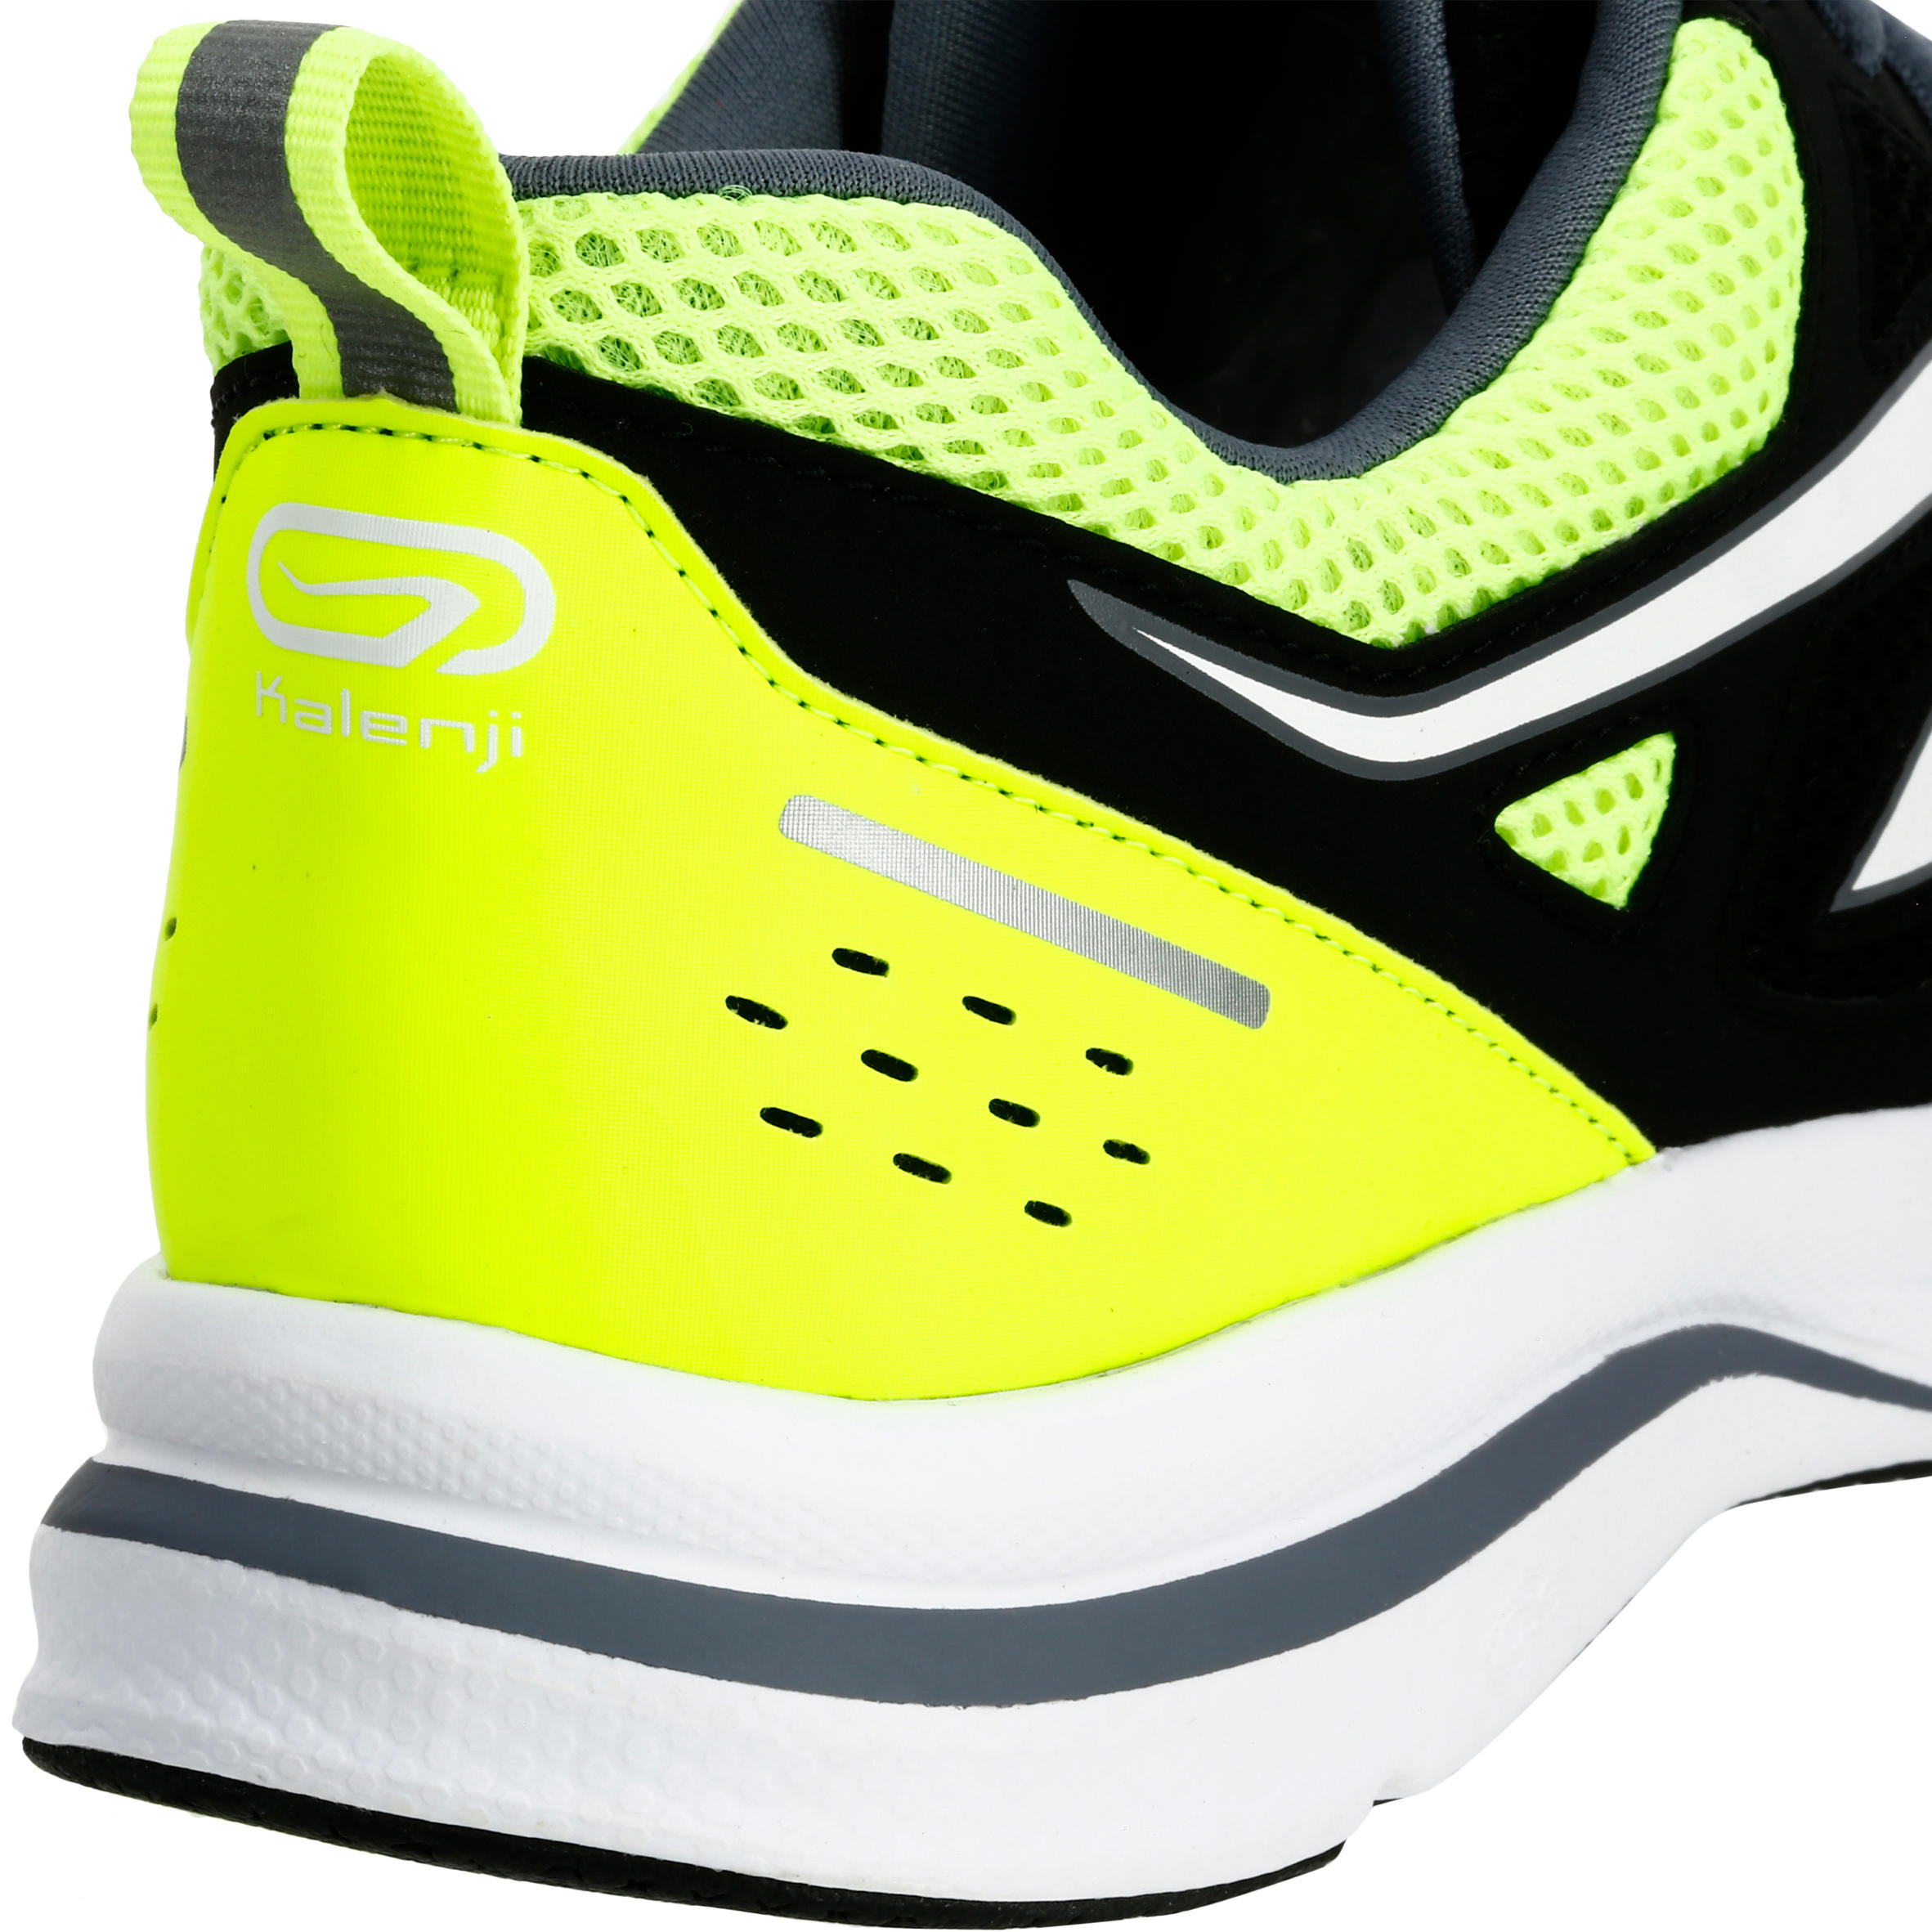 Running Shoes Online|Decathlon Sports 